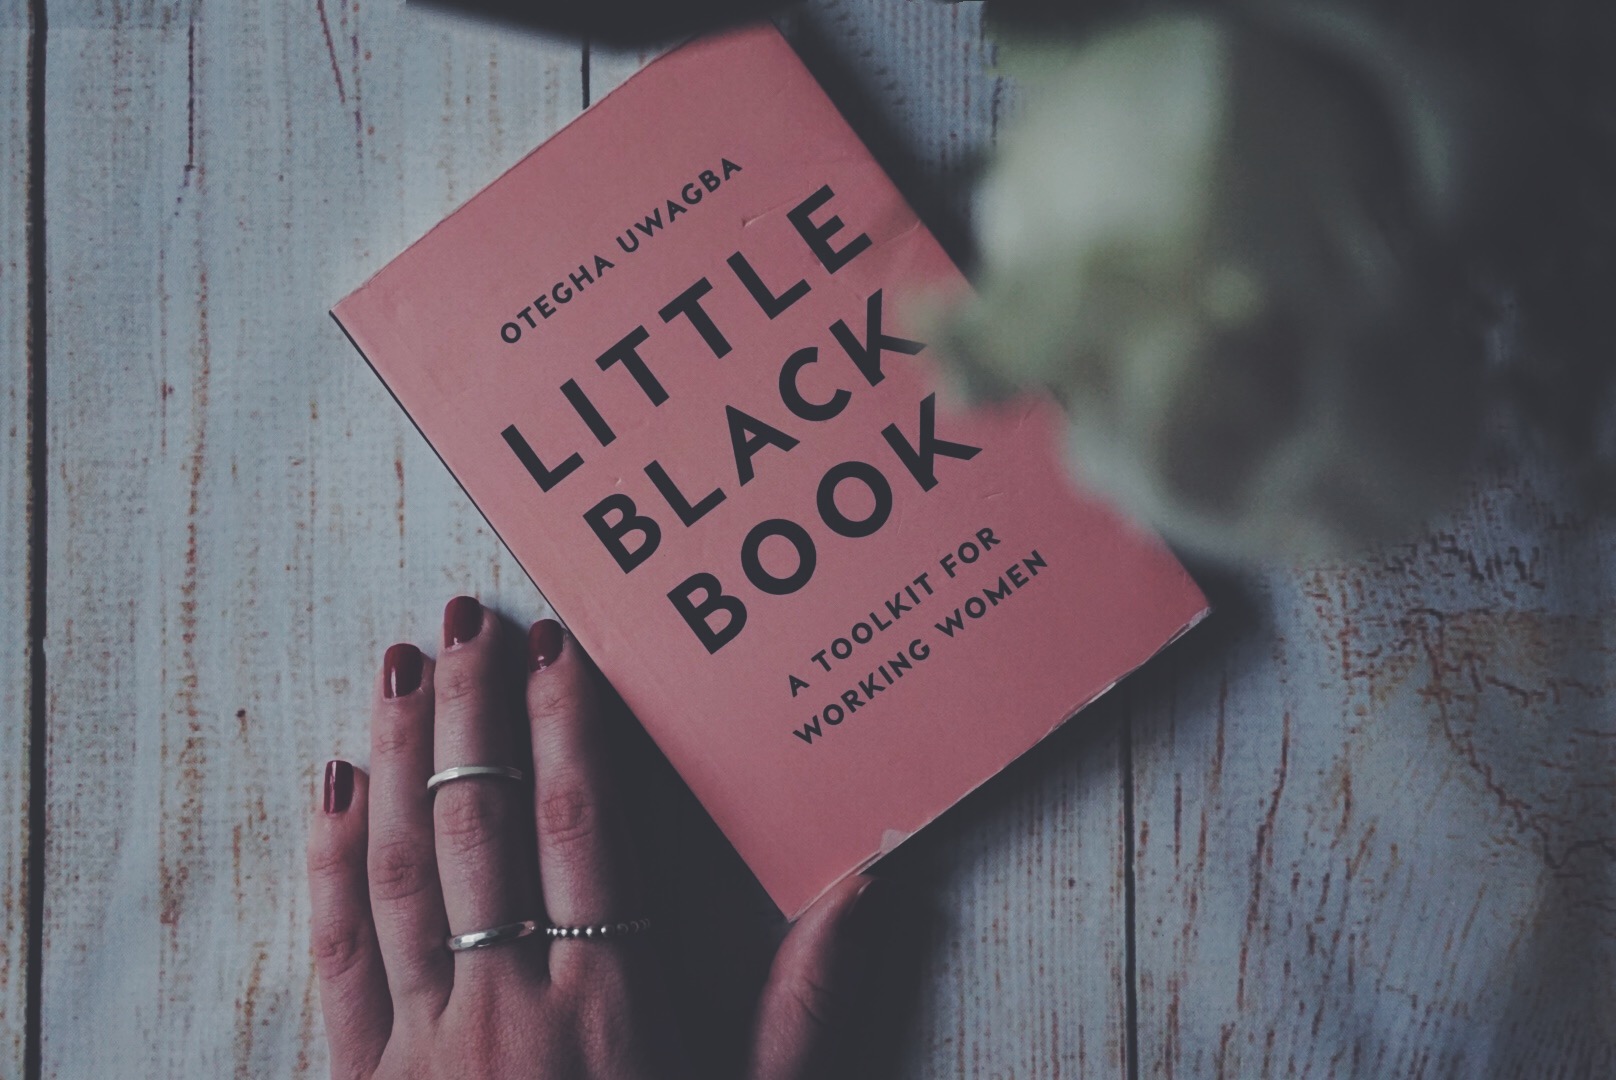 best-selling-books-little-black-book-otegha-uwagba-minas-planet-jasmina-haskovic6.jpg